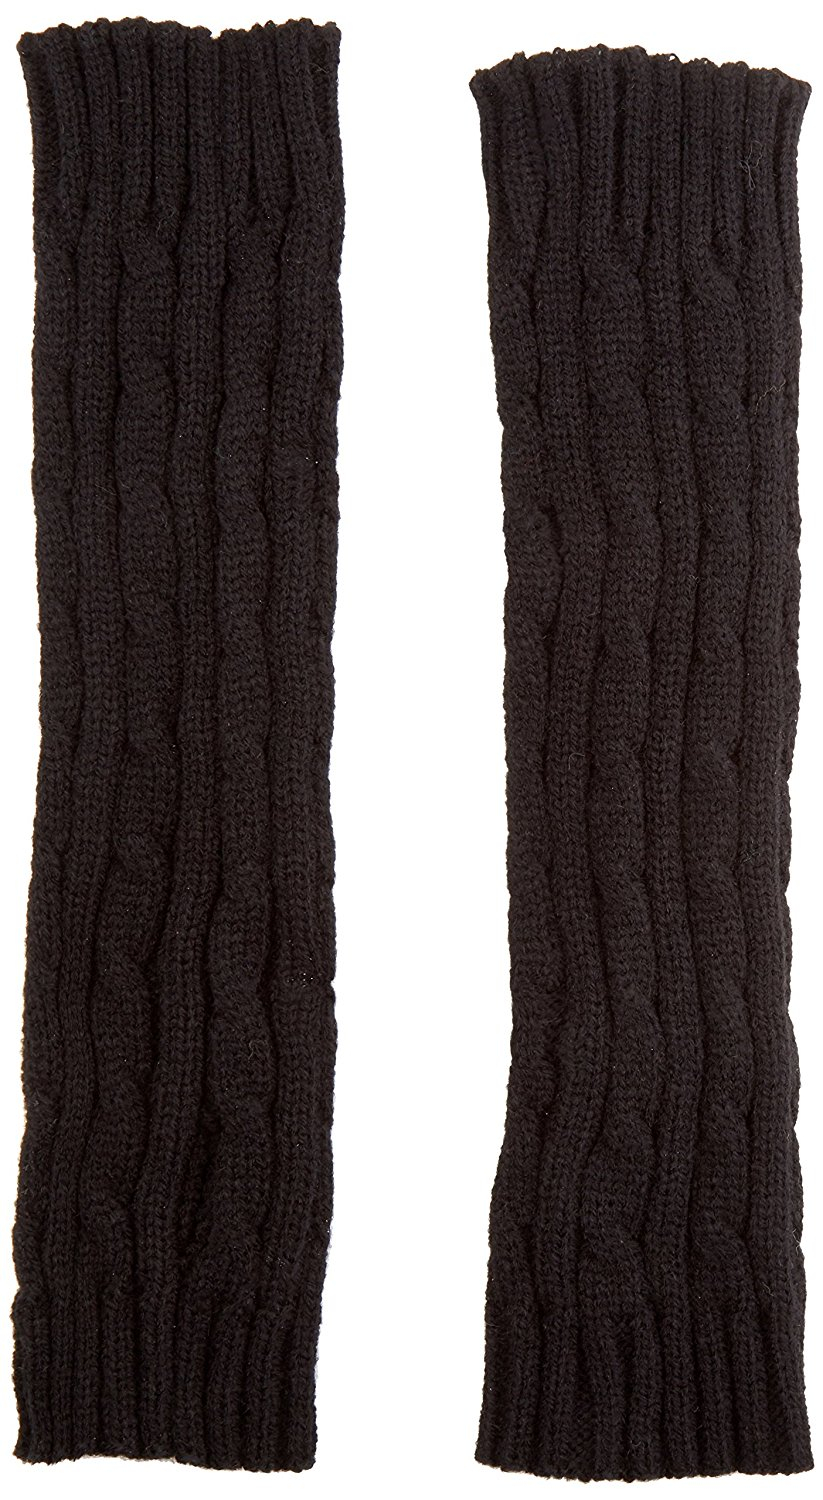 Crochet Fingerless Gloves Pattern Cheap Crochet Fingerless Gloves Find Crochet Fingerless Gloves